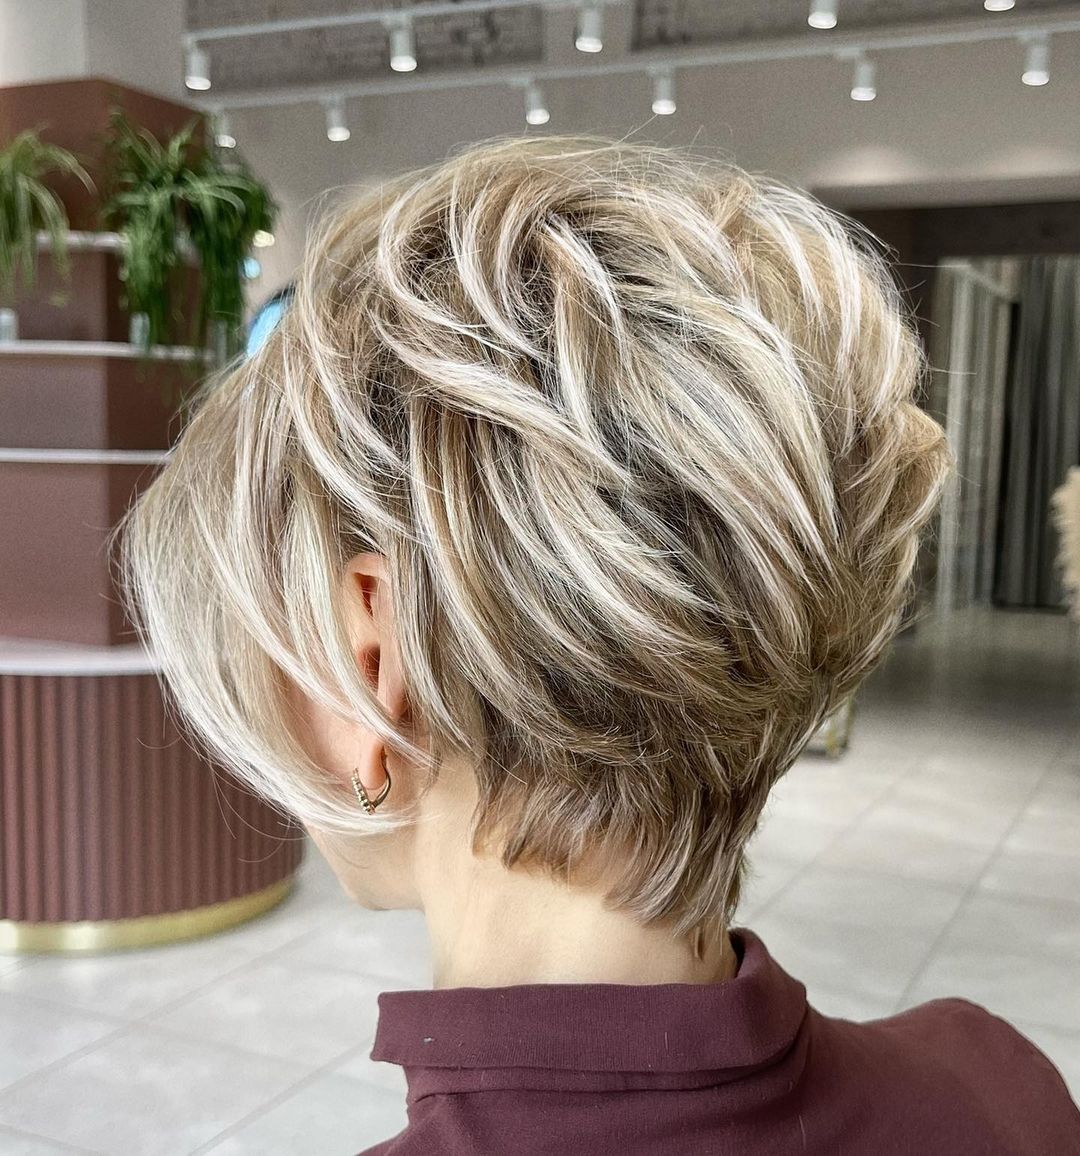 Blonde hairstyles: 16 striking, on-trend examples